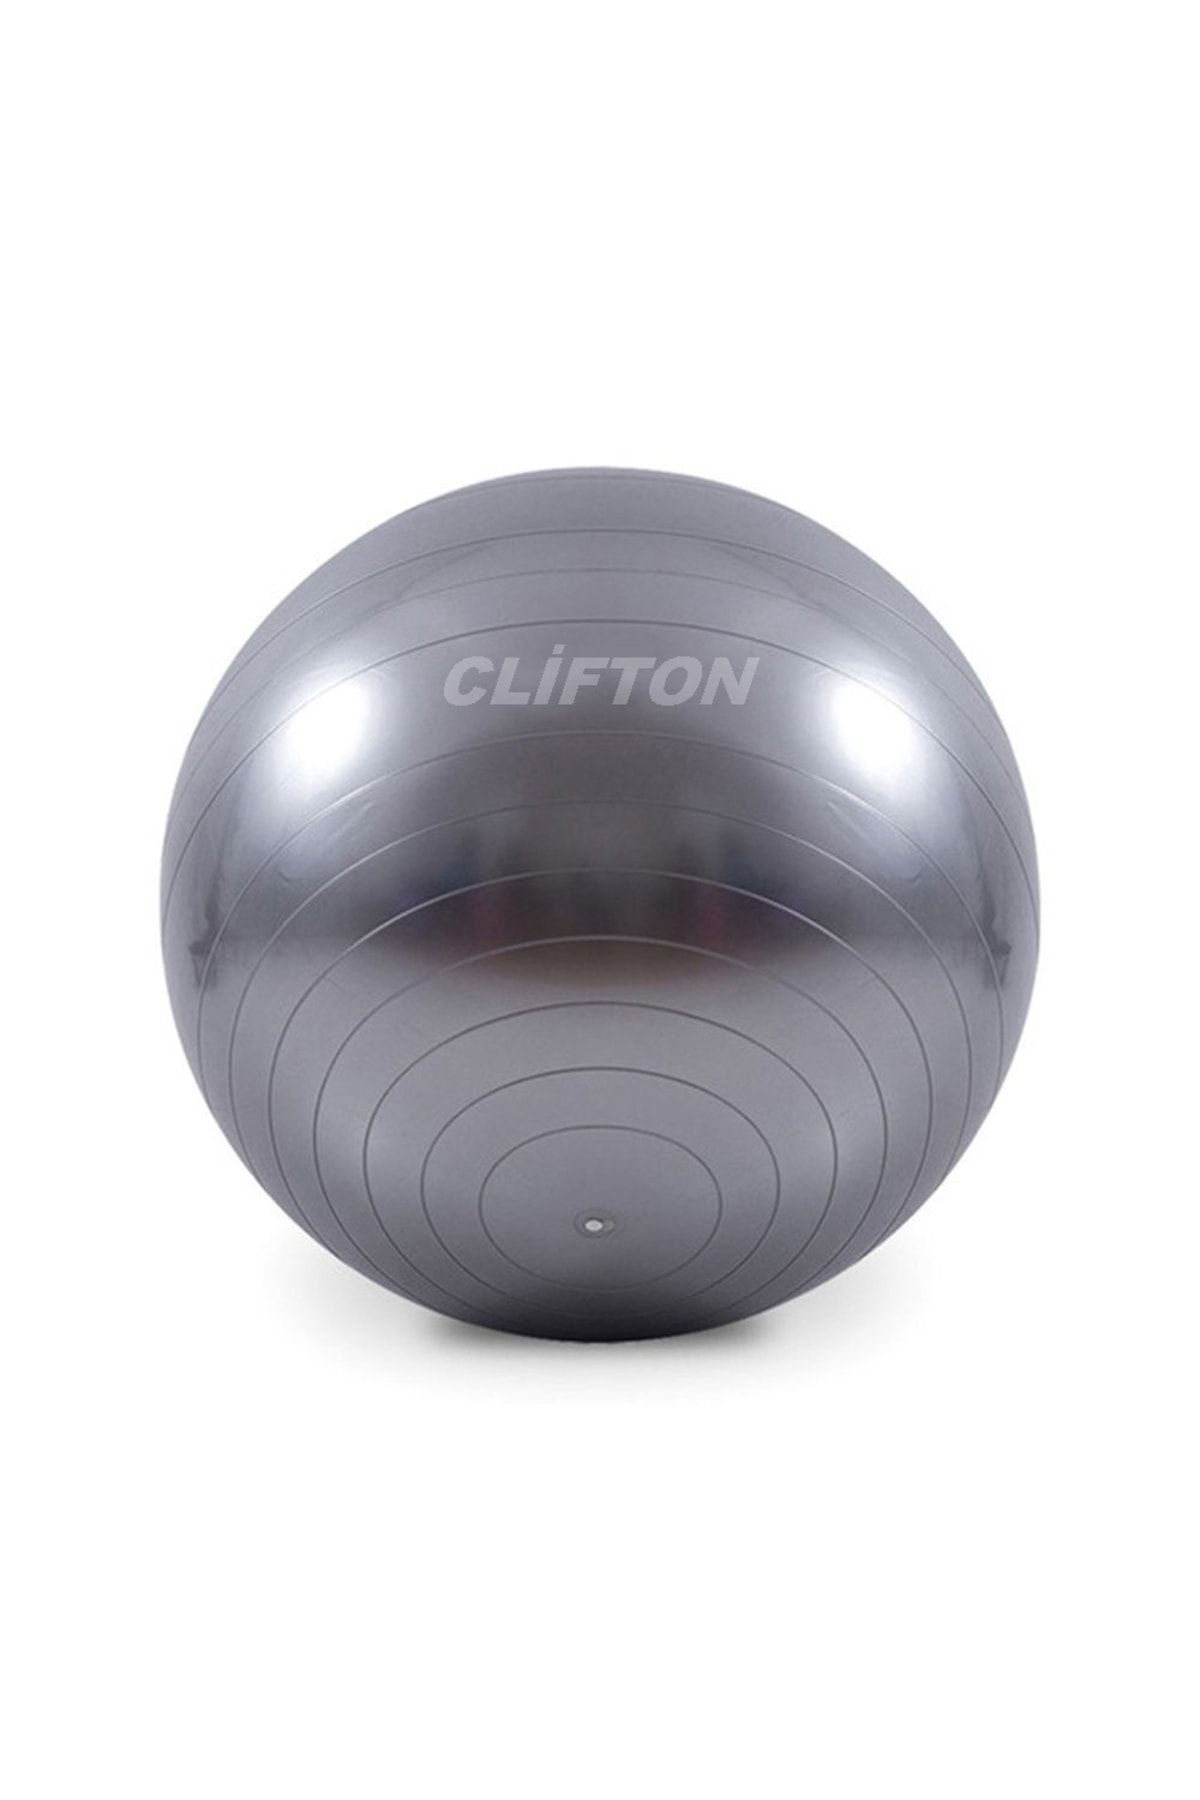 Clifton Clfton Dayanıklı Yüksek Kalite Pilates Topu Denge,aerobik,yoga,fitness Topu 75 Cm Gri